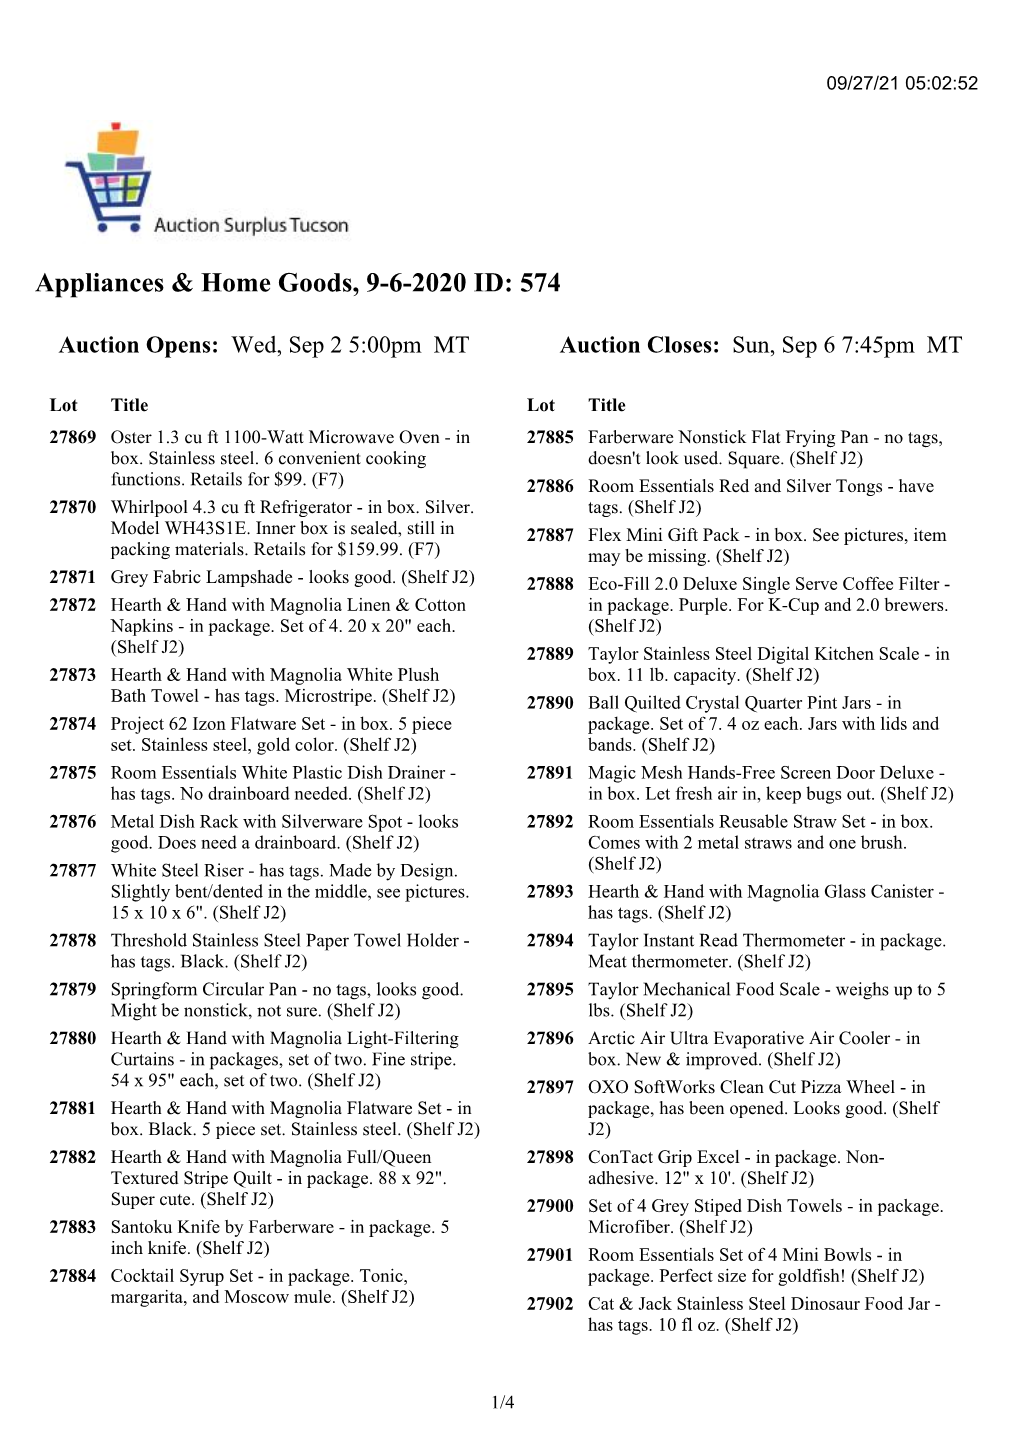 Appliances & Home Goods, 9-6-2020 ID